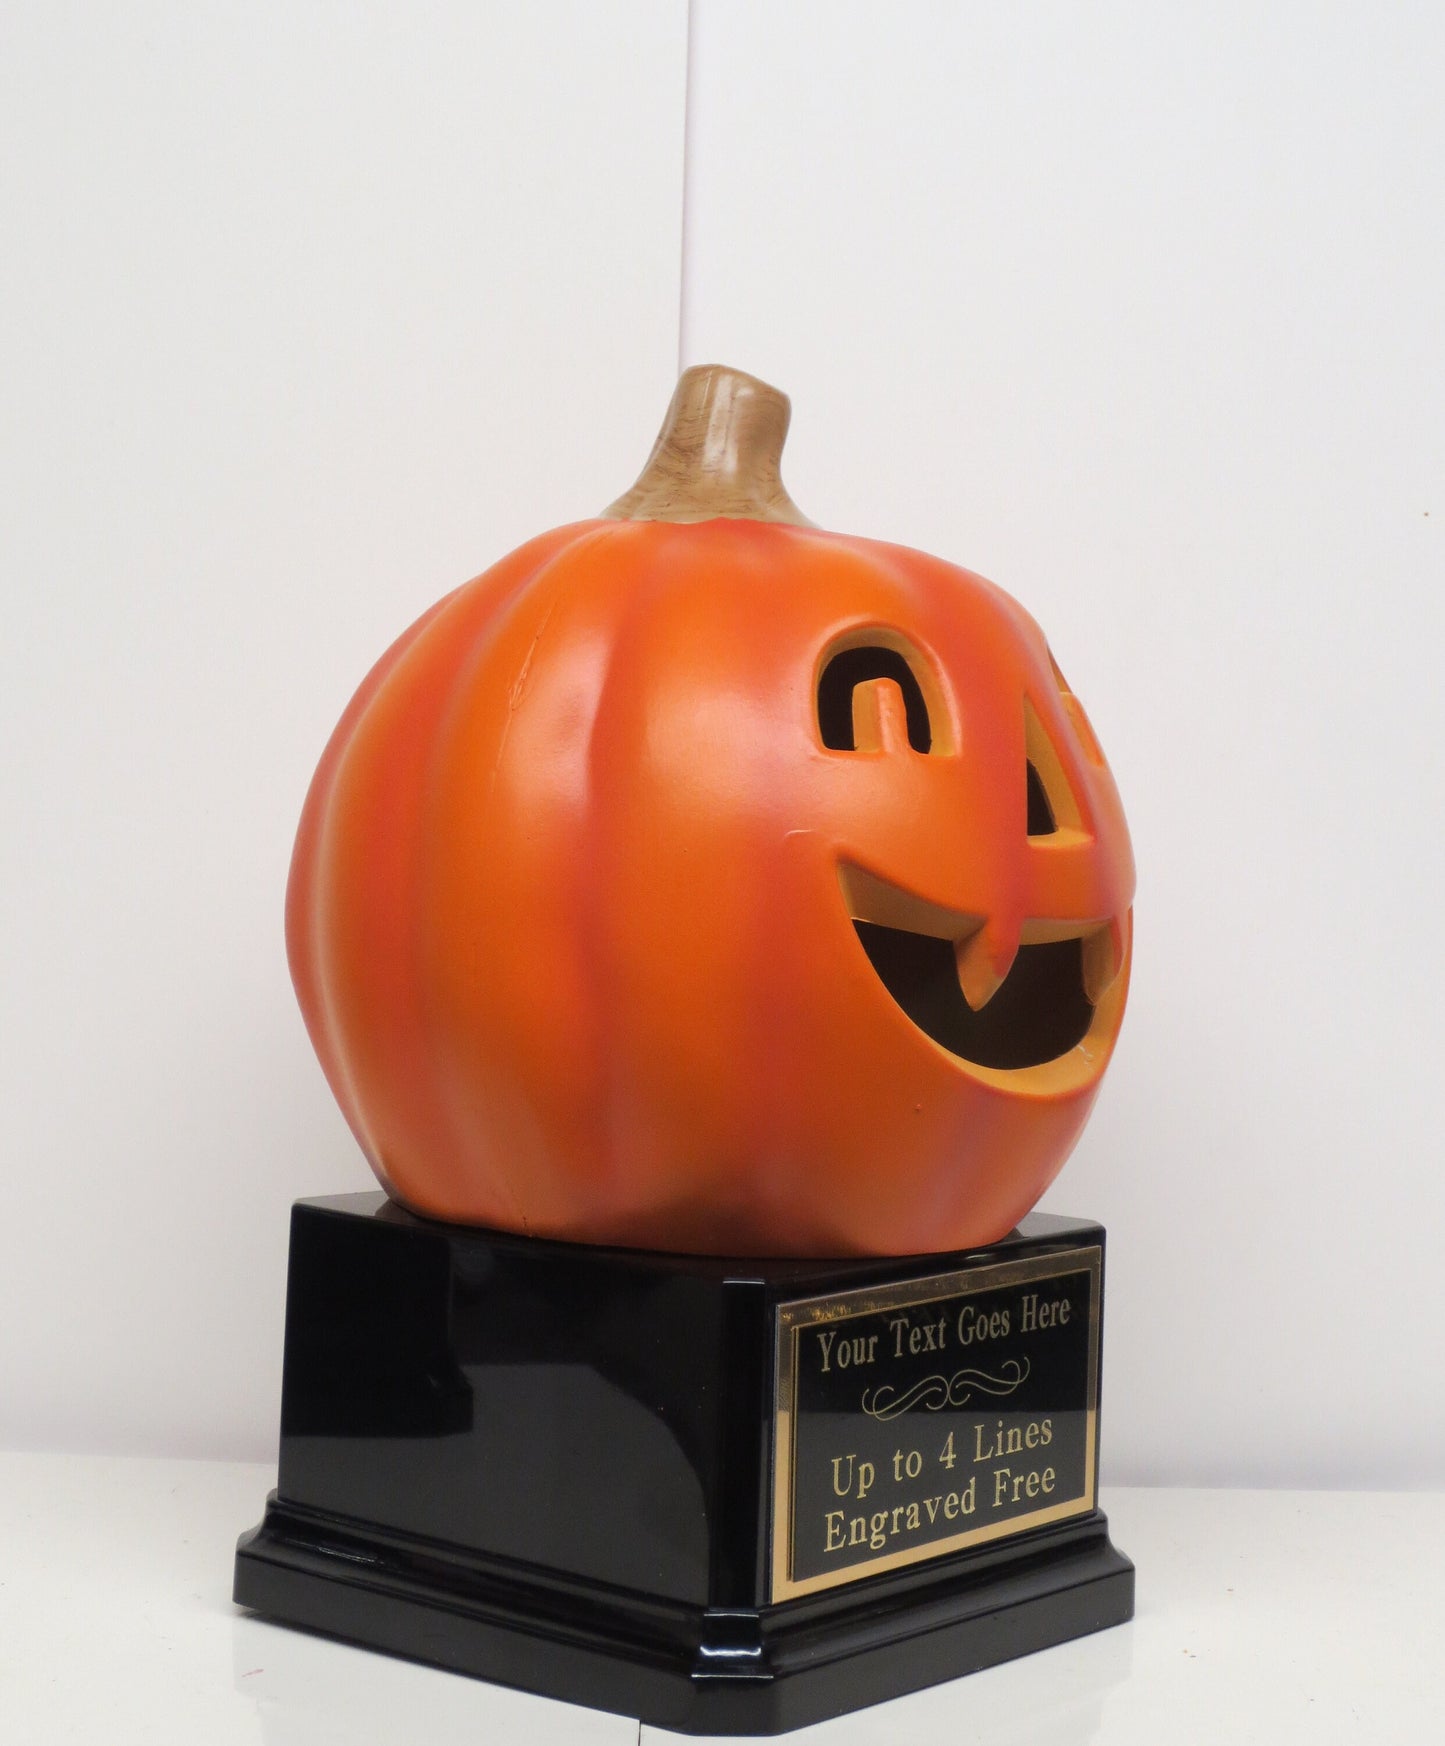 Halloween Trophy Halloween Trophies Dracula Trophy Pumpkin Carving Contest Best Costume Contest Jack O Lantern with Fangs Halloween Decor